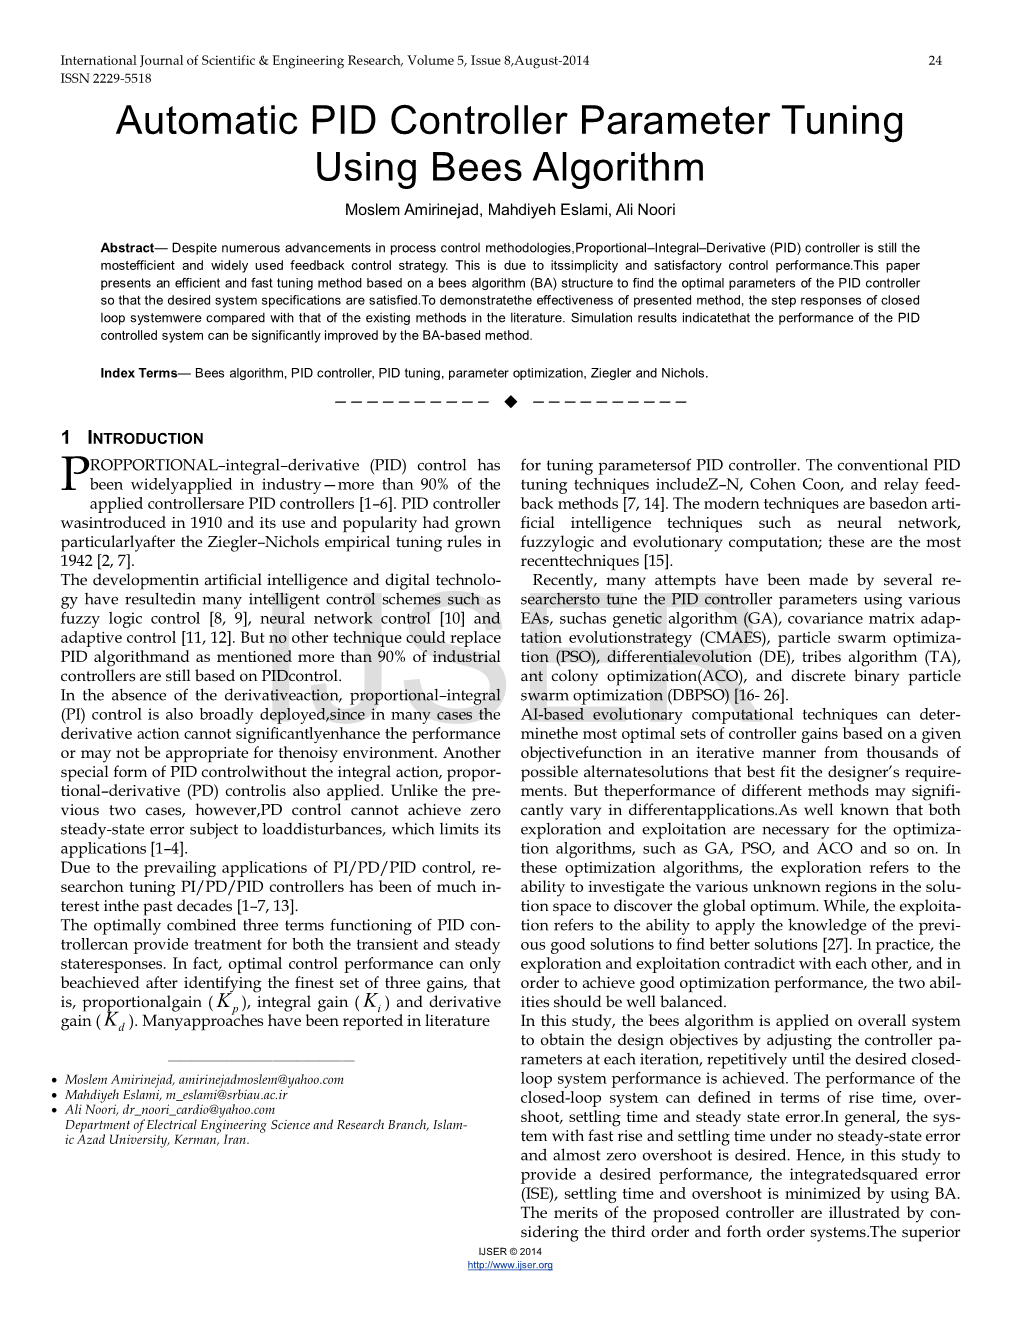 Automatic PID Controller Parameter Tuning Using Bees Algorithm Moslem Amirinejad, Mahdiyeh Eslami, Ali Noori